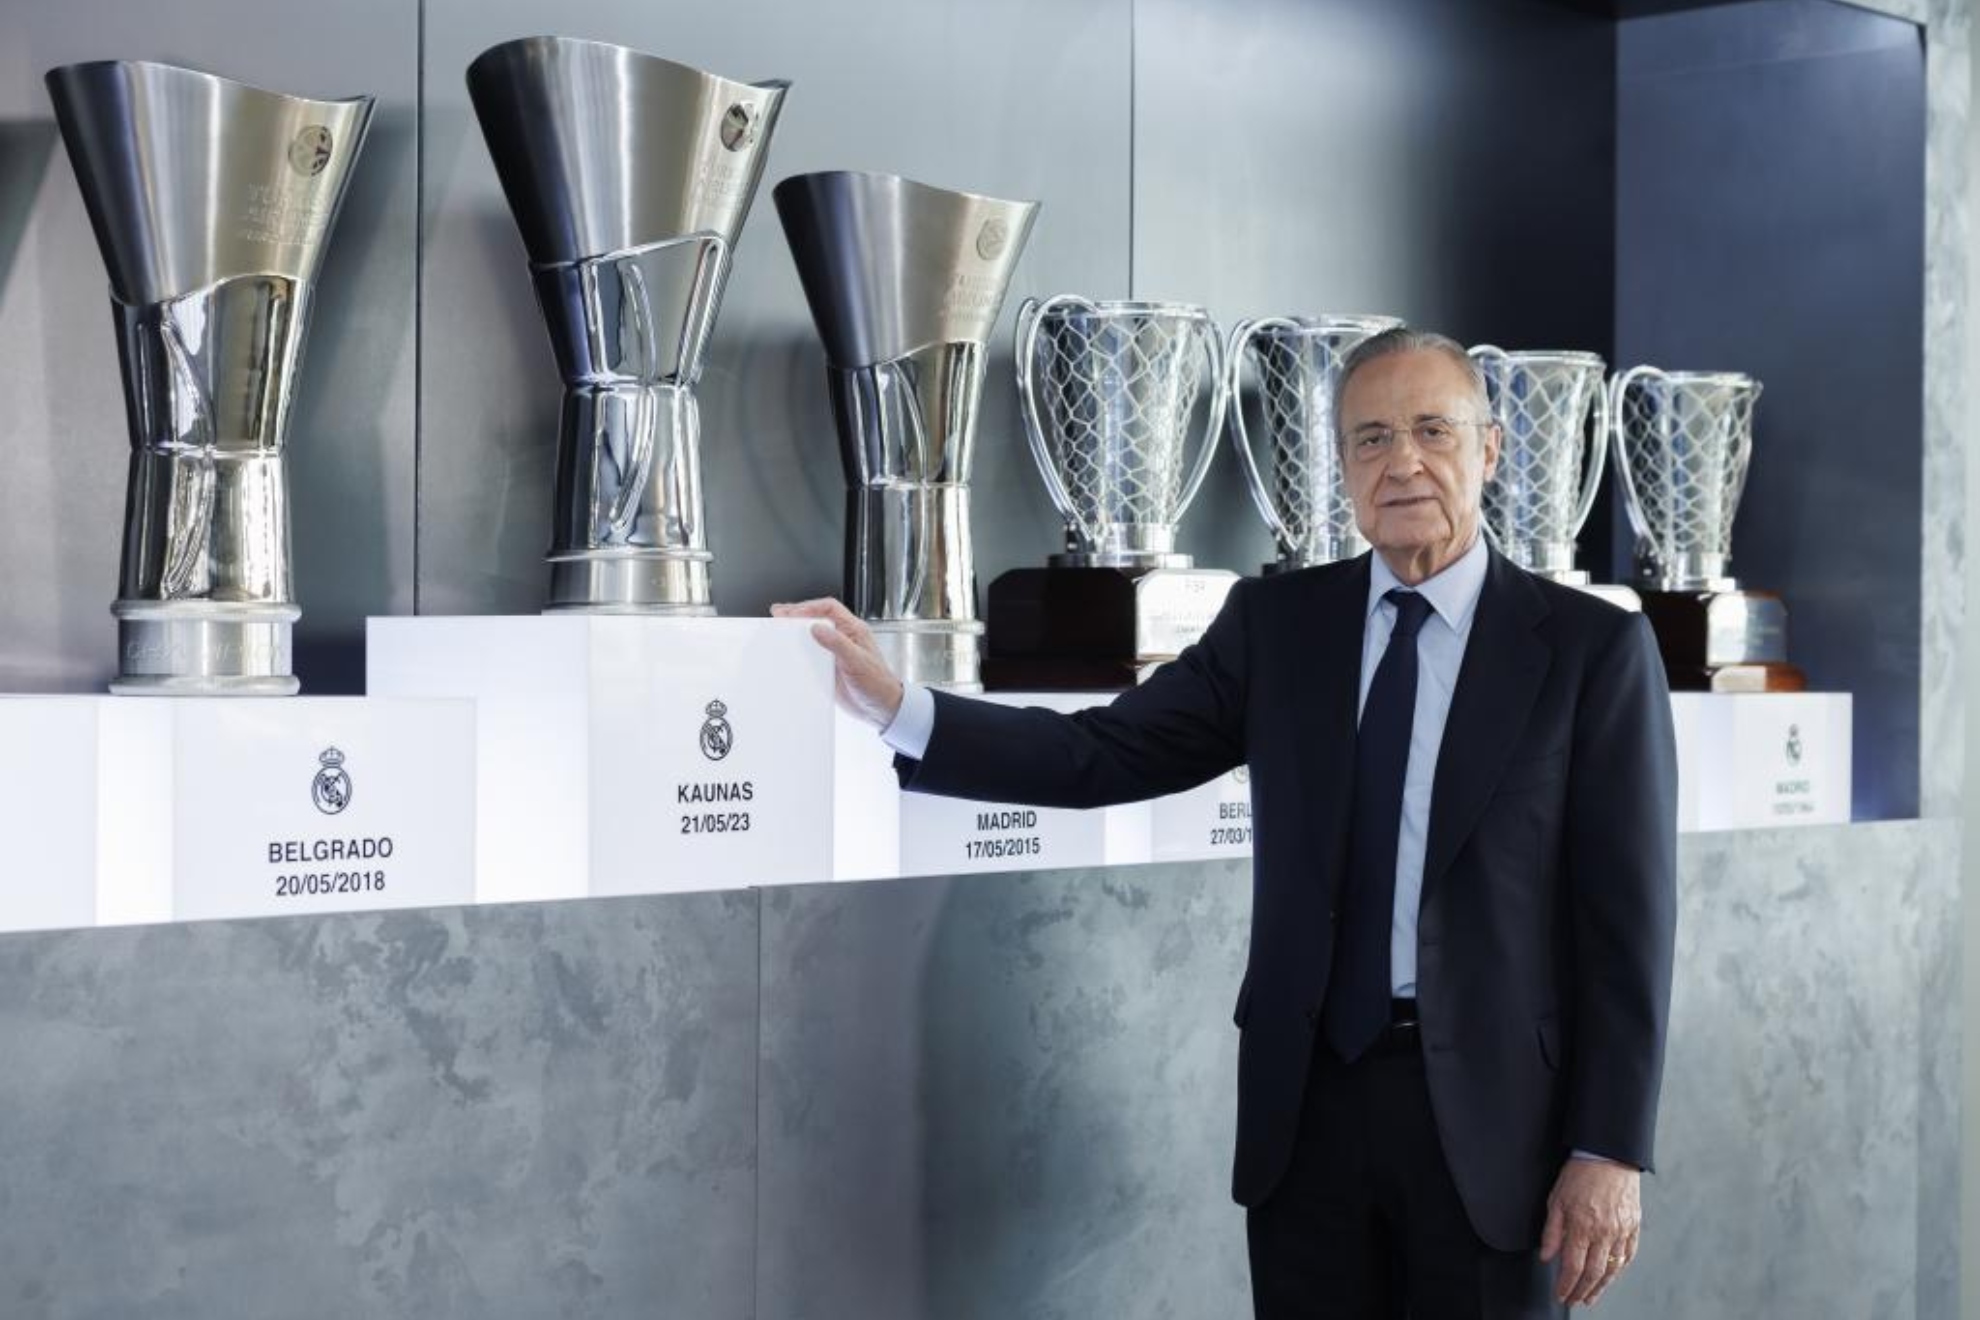 Florentino Prez coloca en la vitrina la undcima del Real Madrid de baloncesto